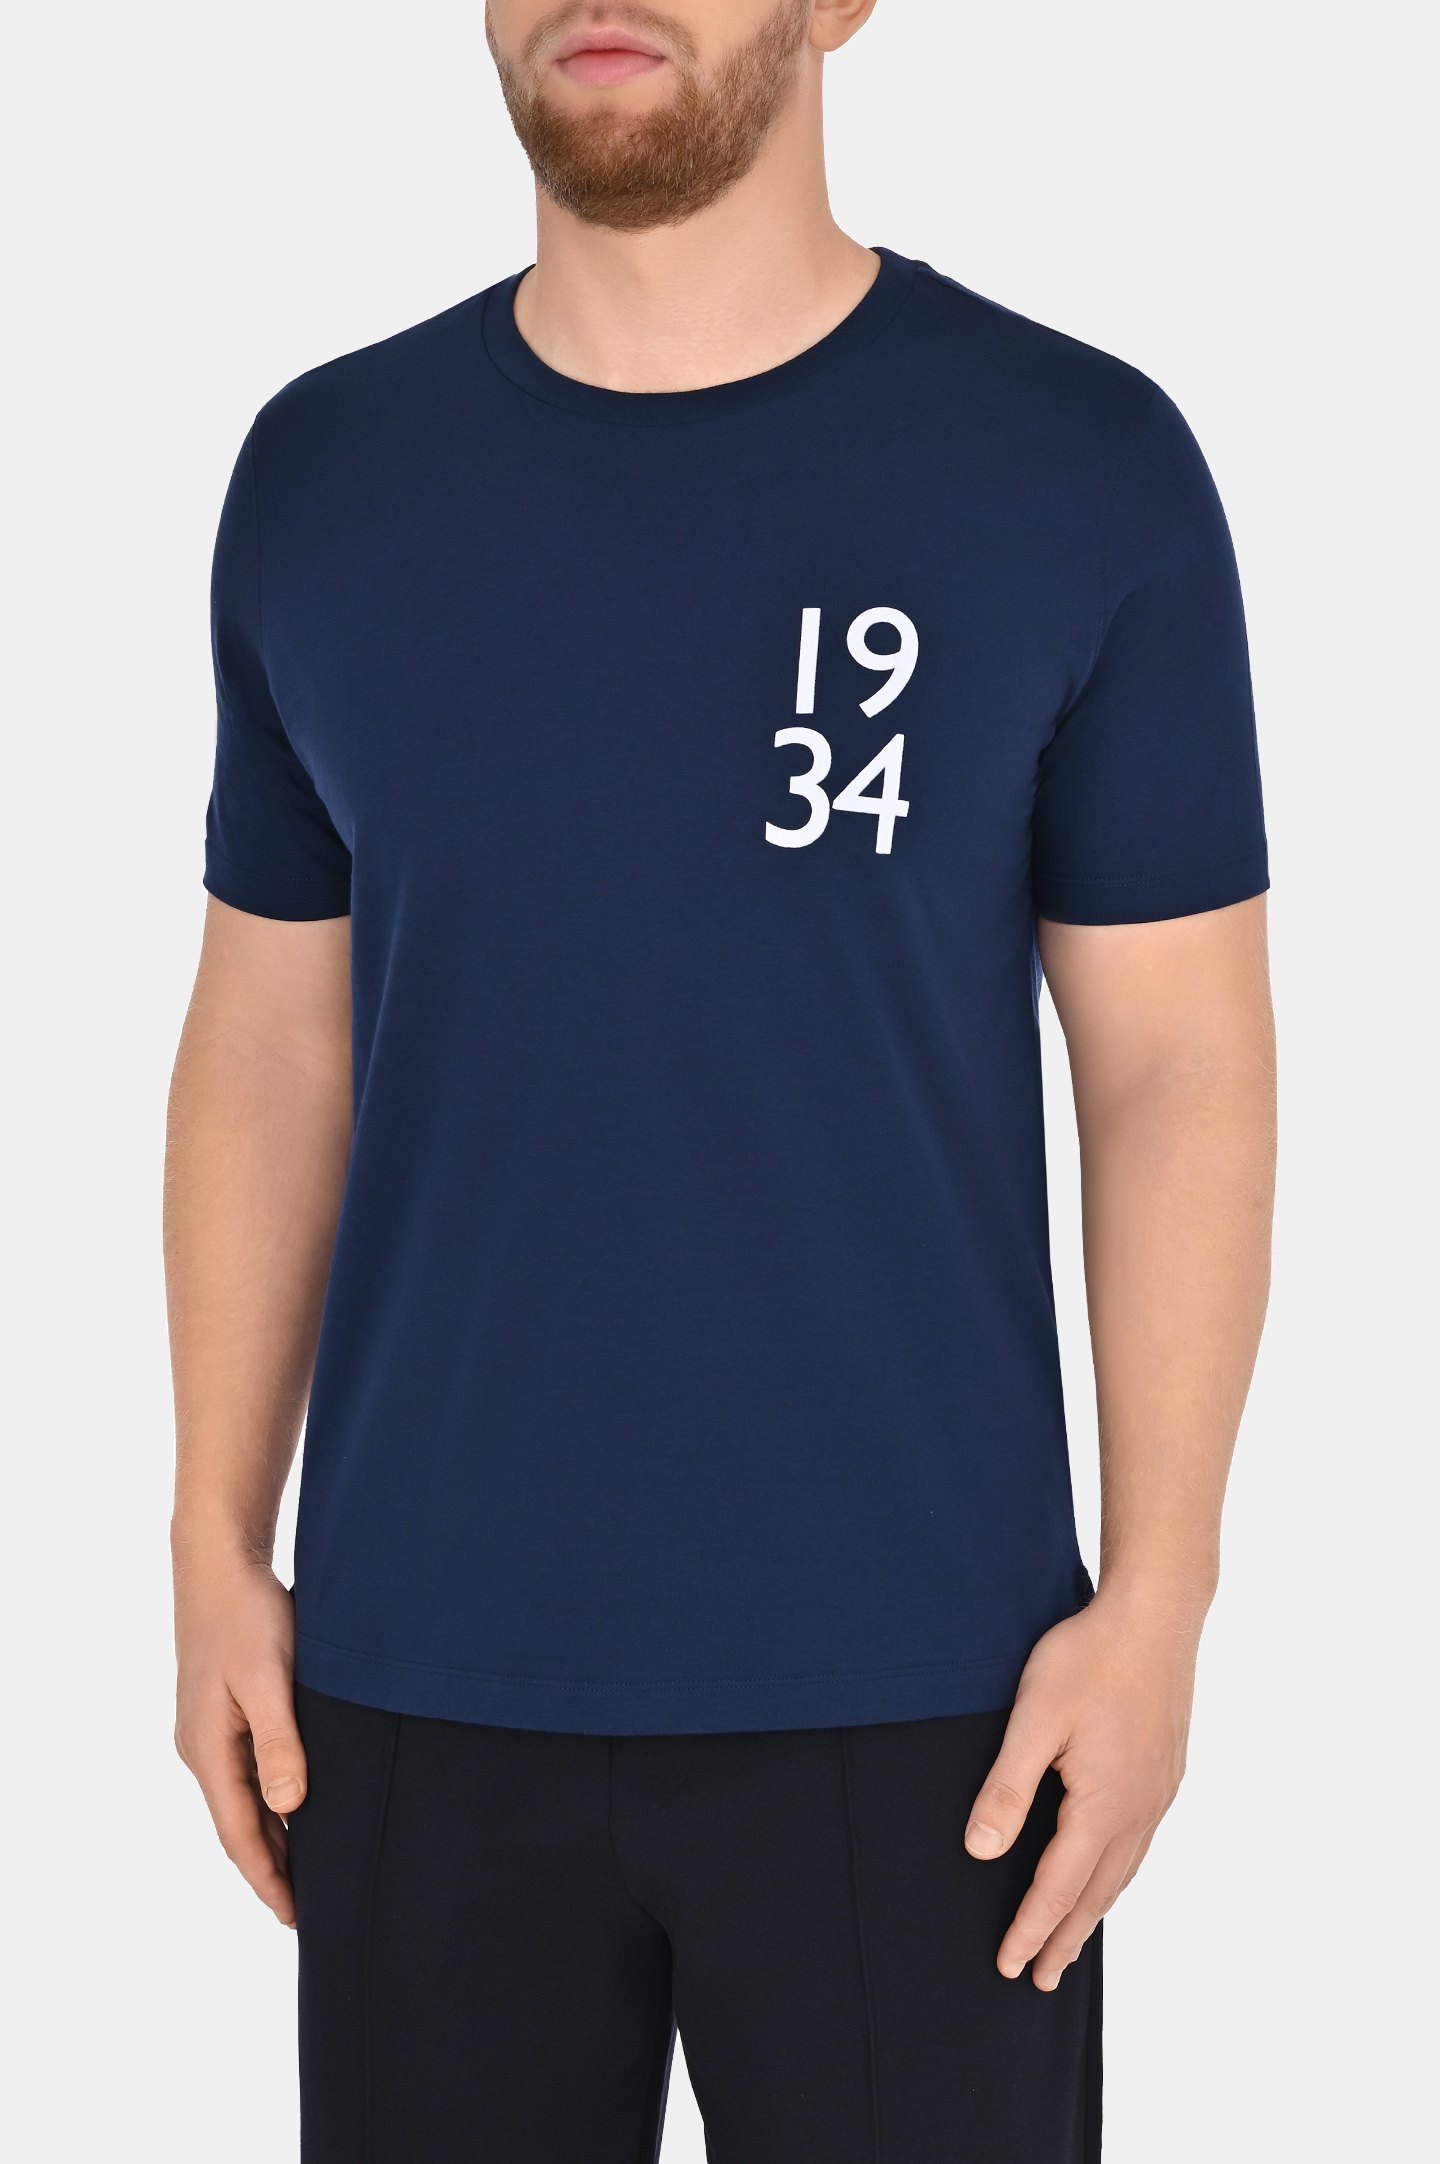 Хлопковая футболка с логотипом CANALI MJ02039 T0806/1, цвет: Темно-синий, Мужской